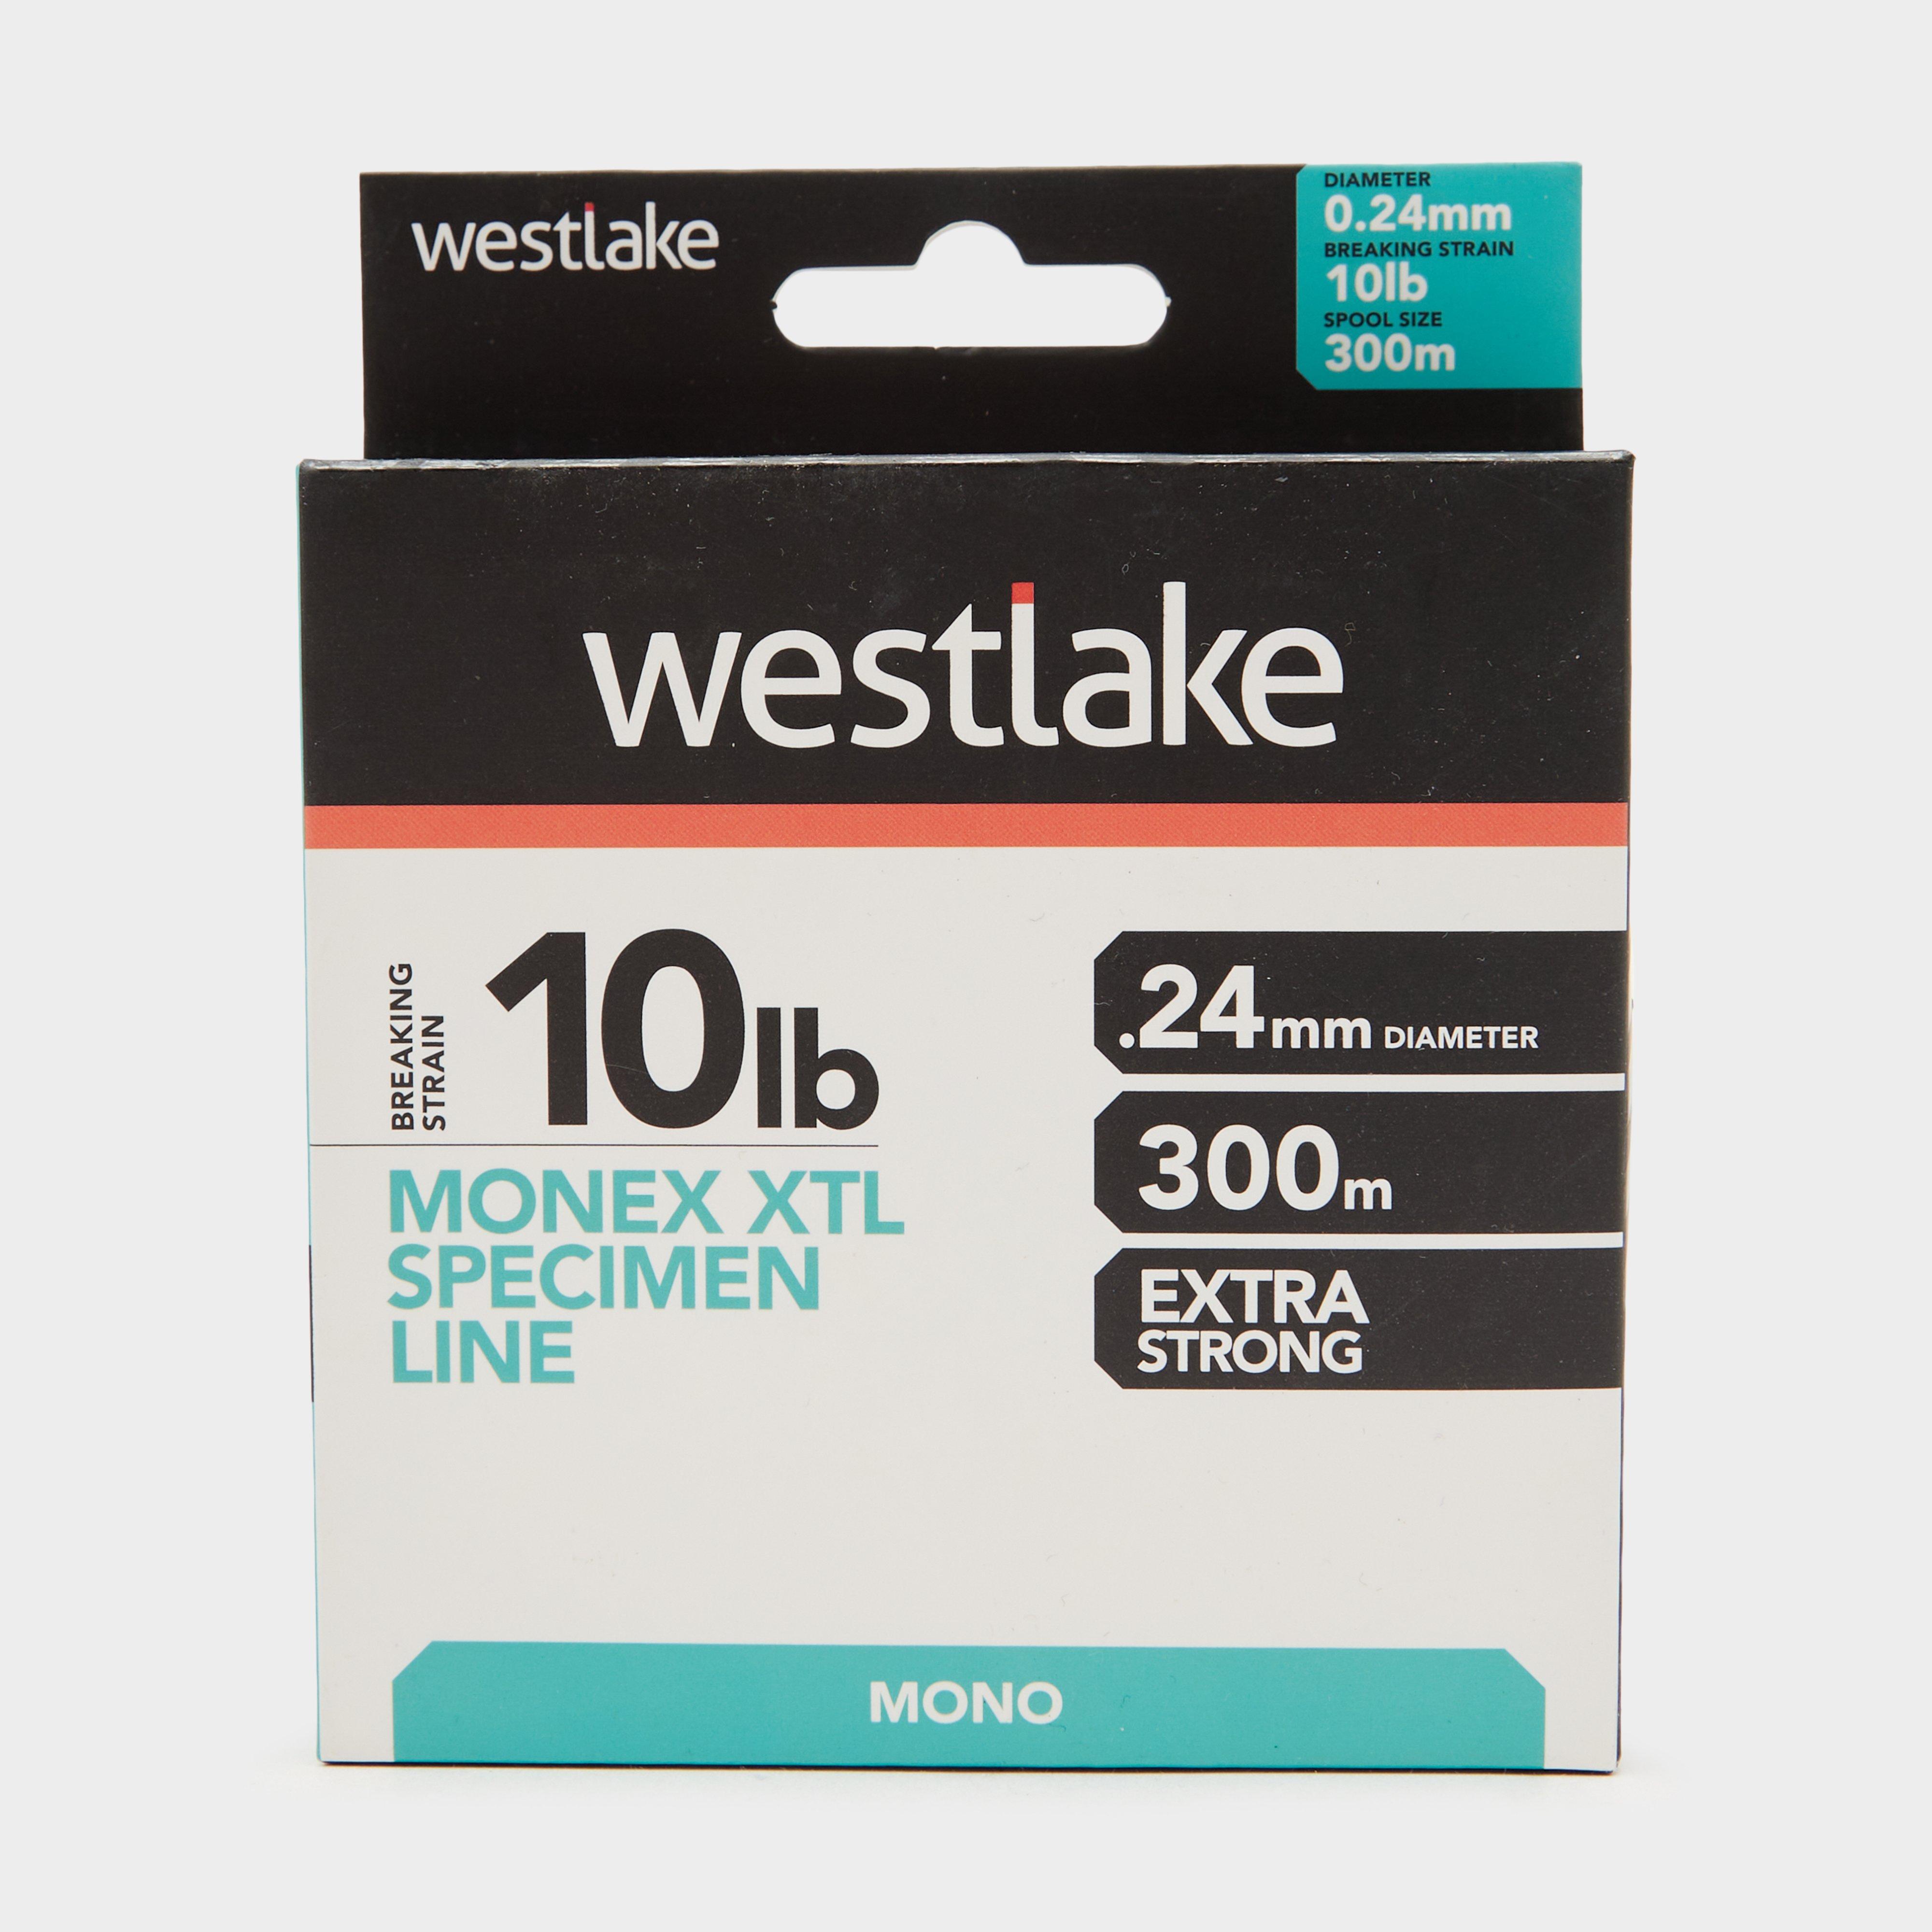 Westlake Xl Specim Mono 10lb 28mm 300m - Multi/28mm  Multi/28mm